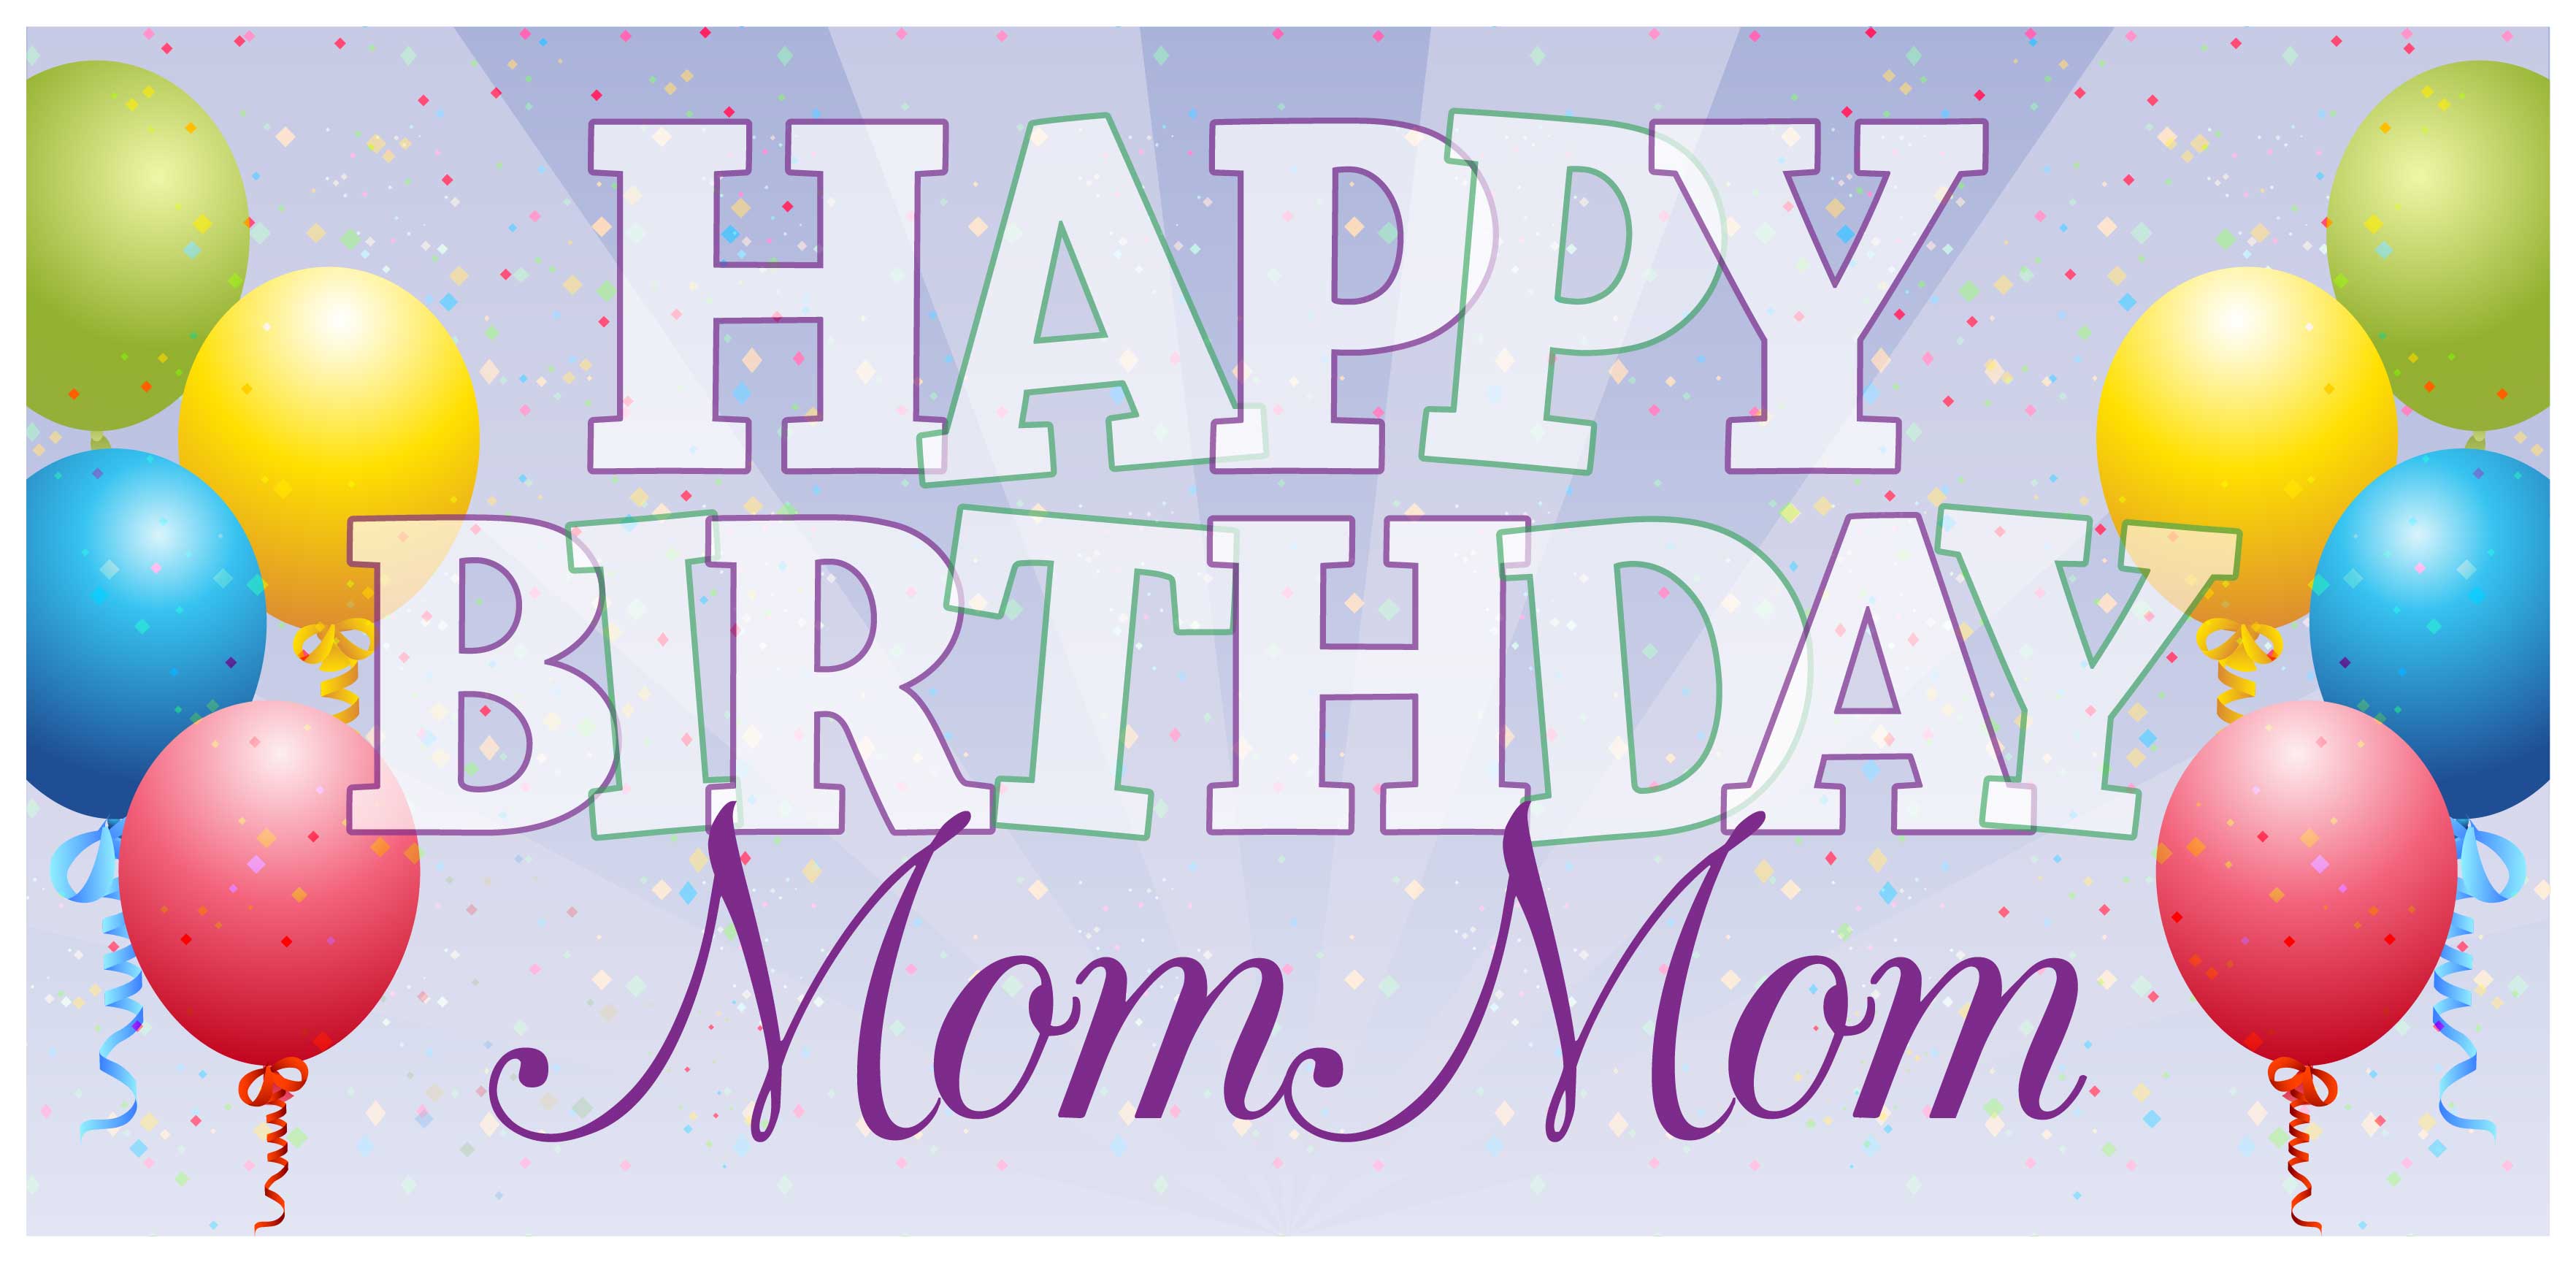 Mom Mom's Birthday Too